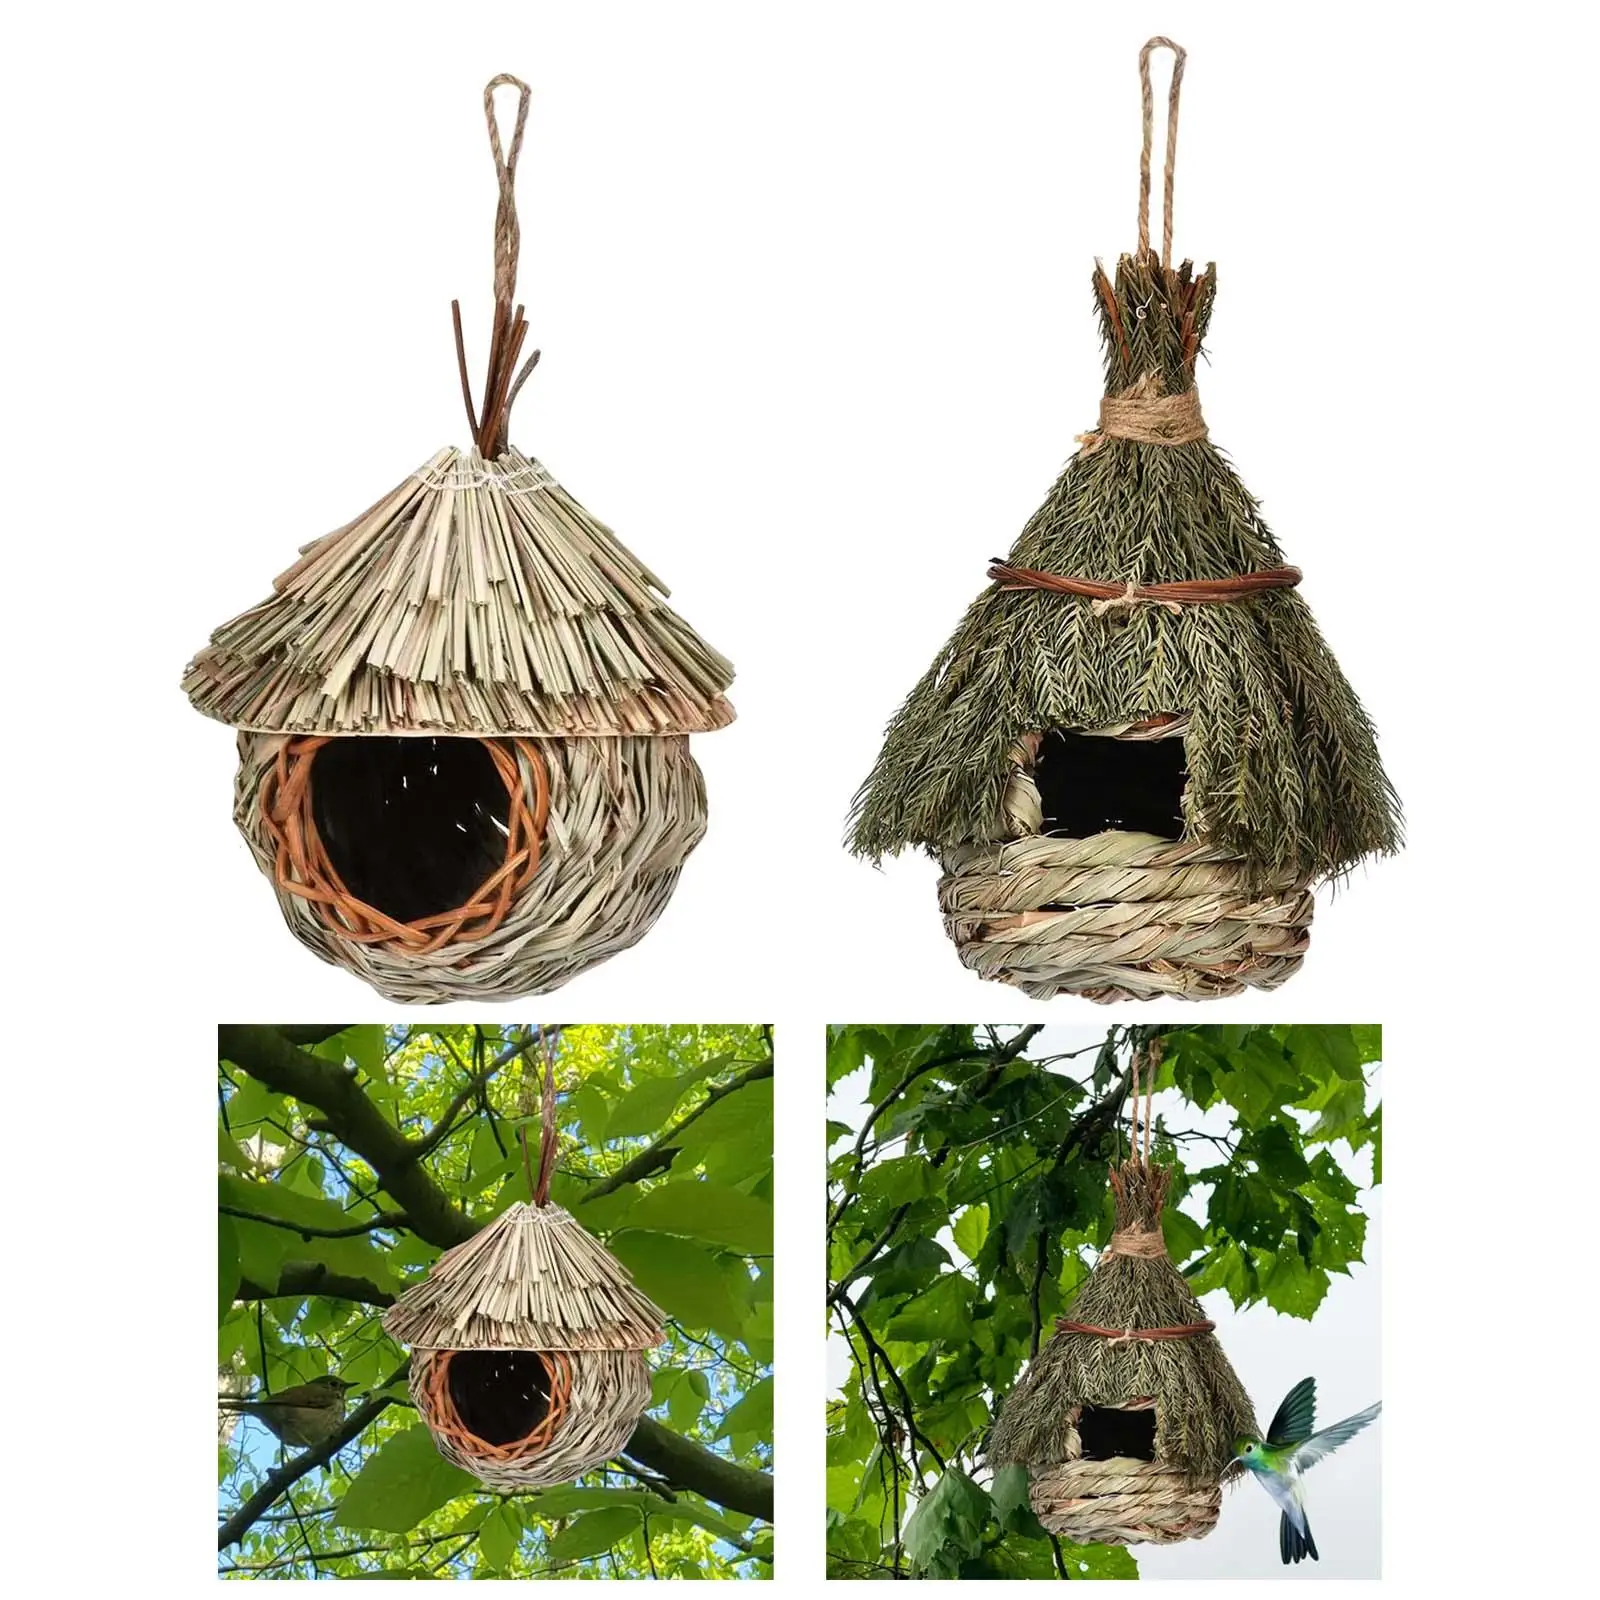 Natural Birdhouse Decoration Pet Bedroom Hut Cozy Woven Hanging Birds Cage Nest for Lovebird Pigeons Parrots Owls Outdoor